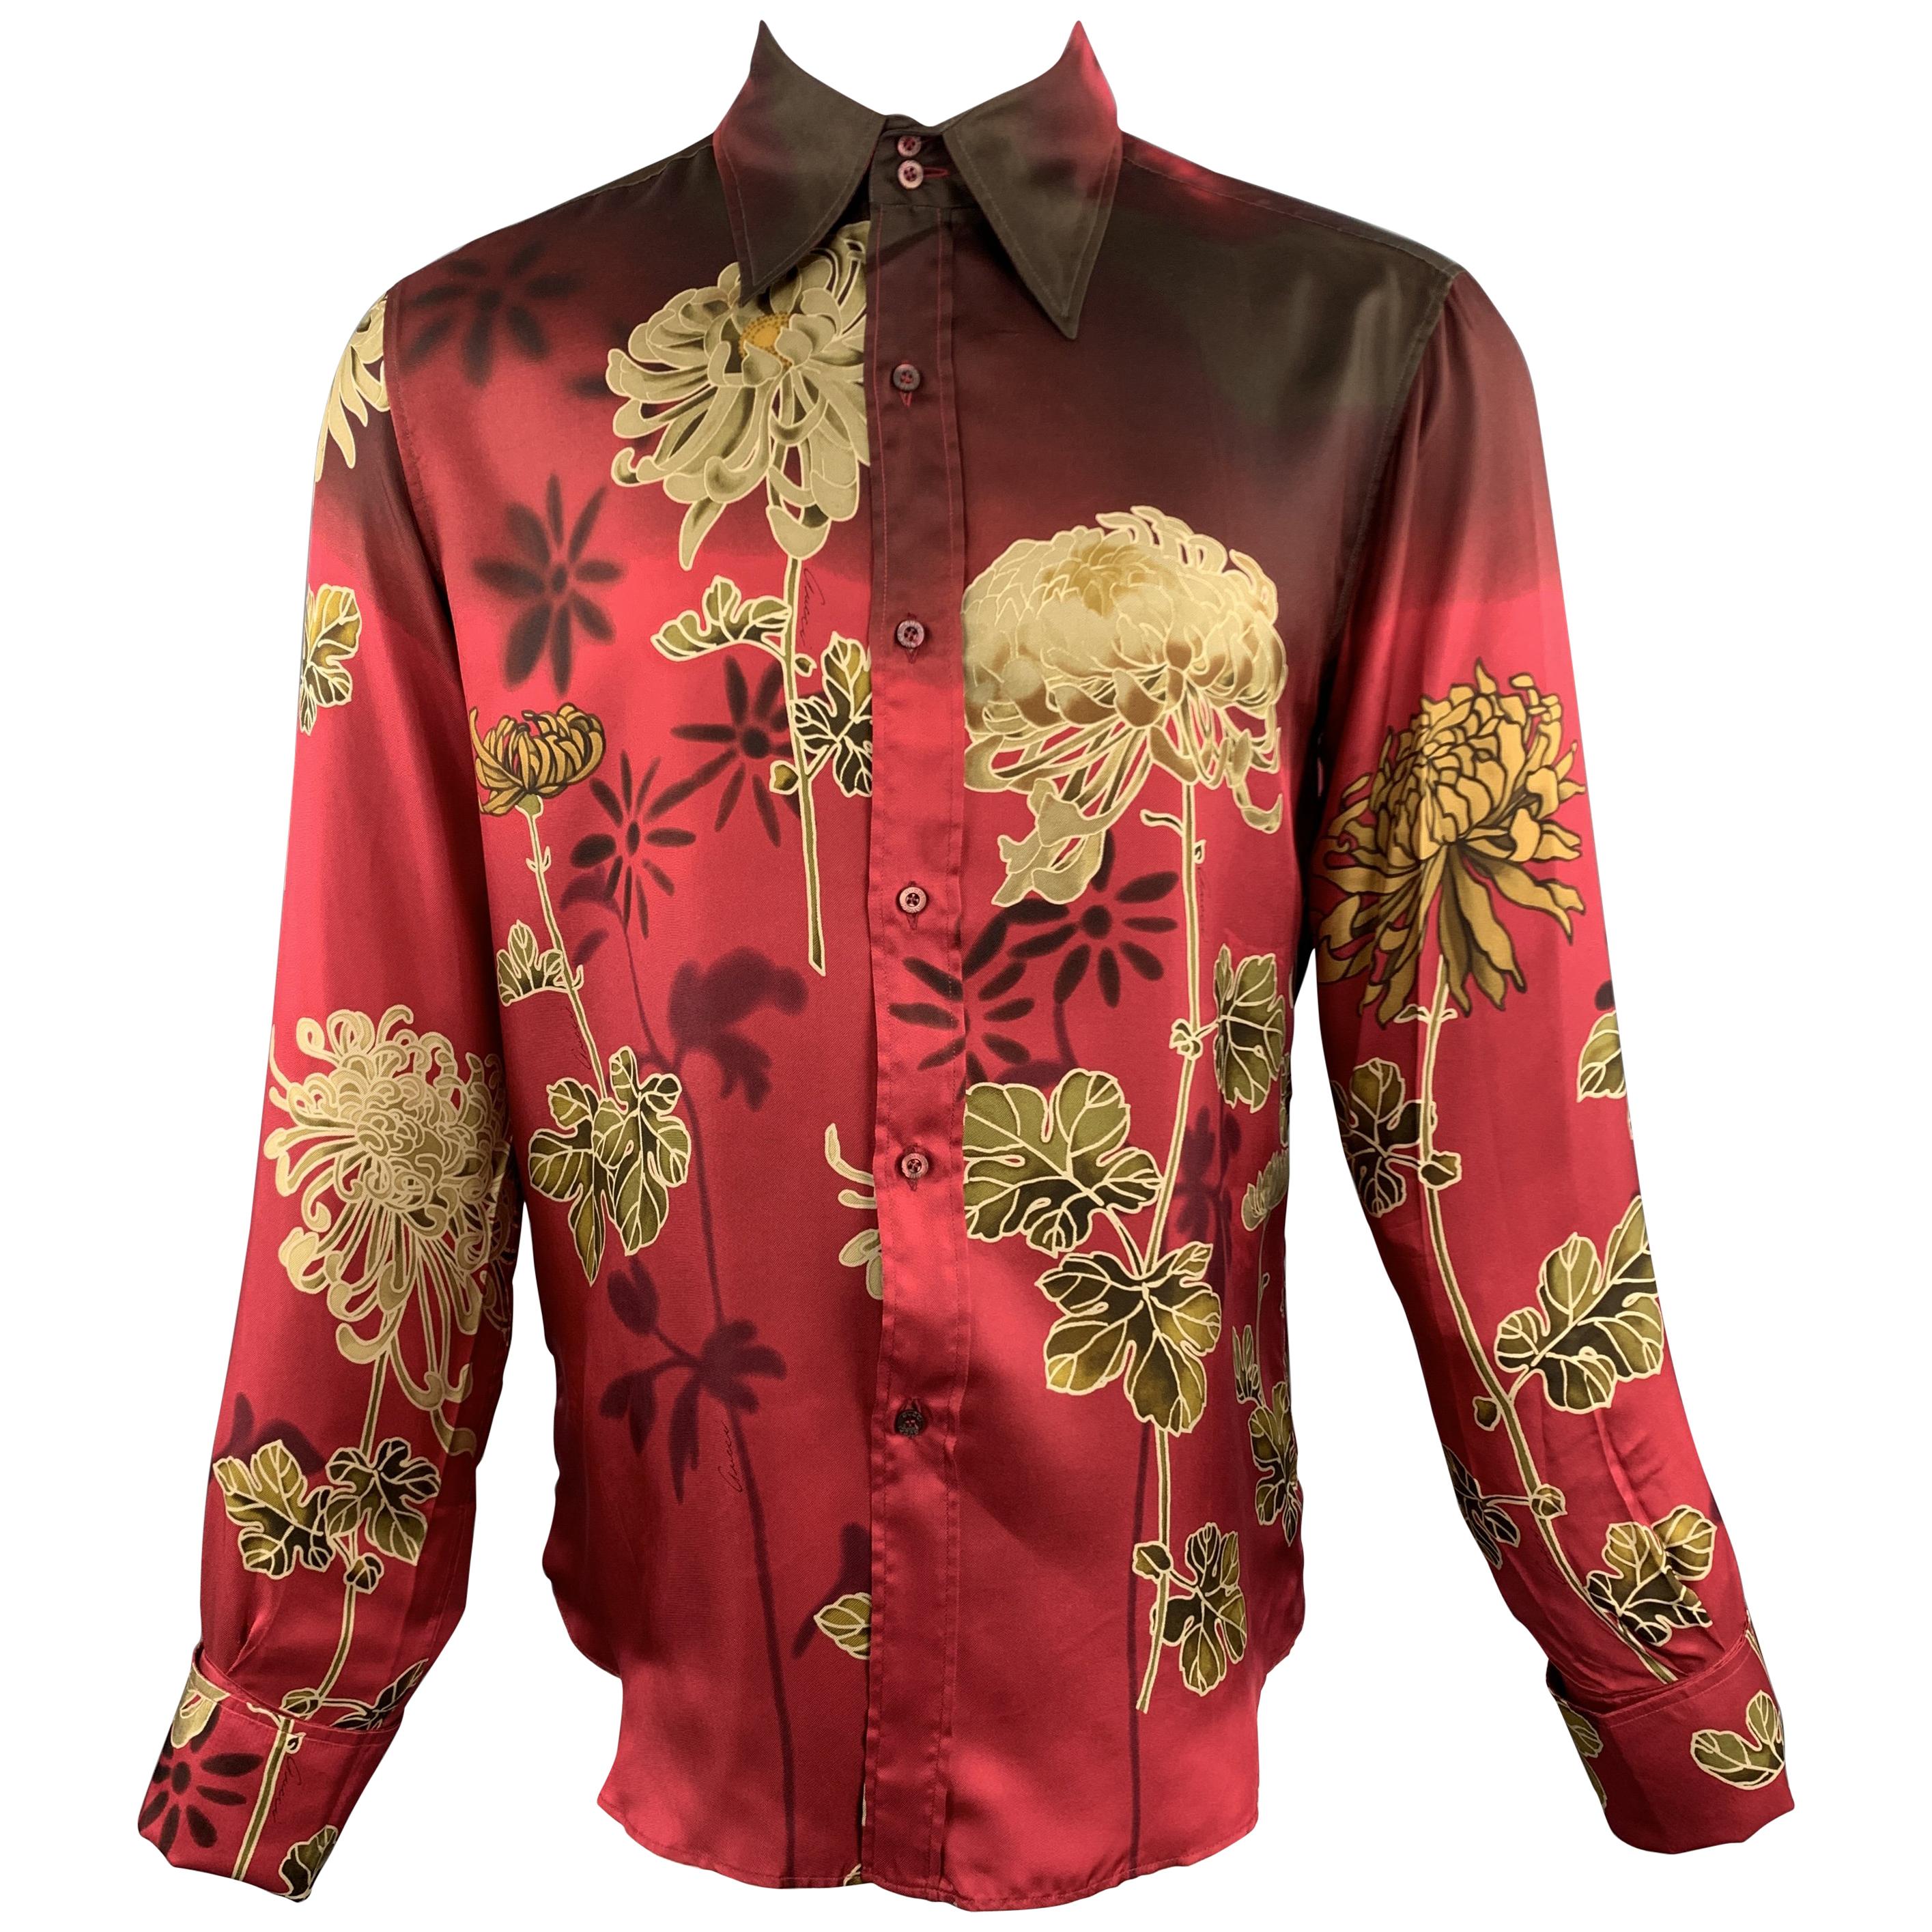  GUCCI by TOM FORD M Burgundy Floral Silk French Cuff Long Sleeve Shirt